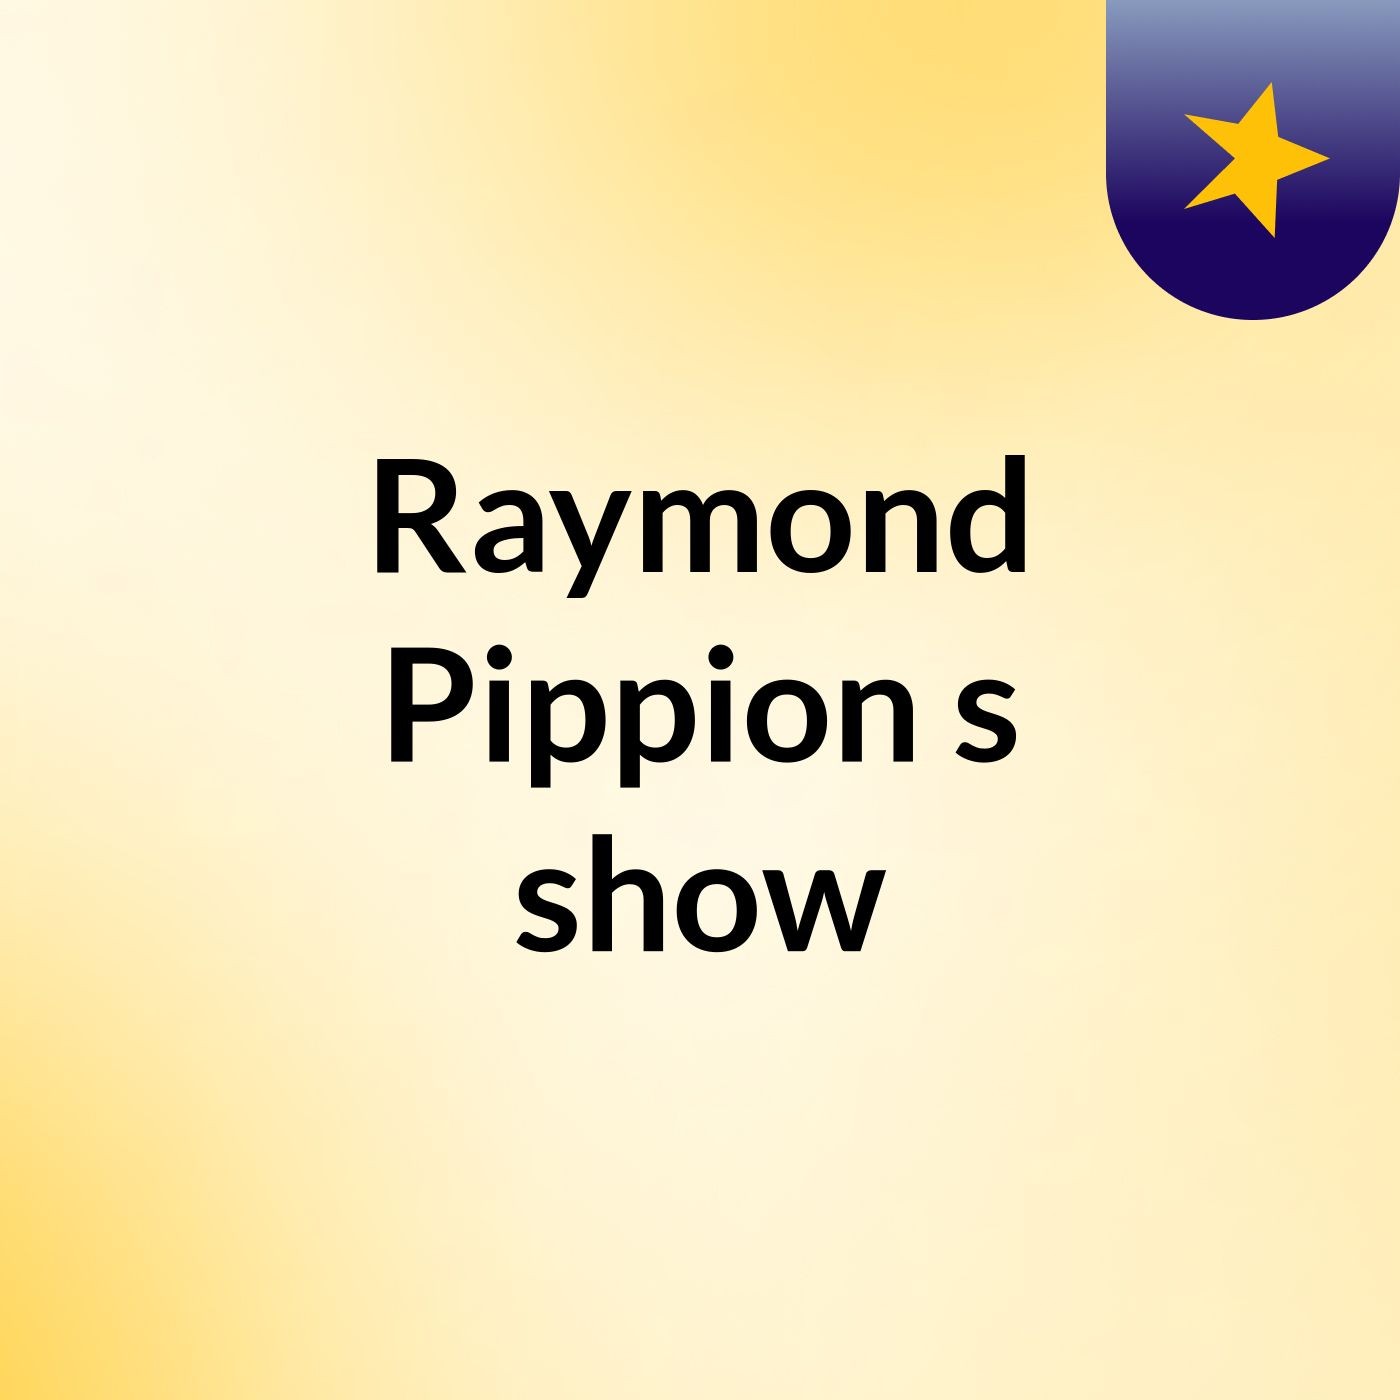 Raymond Pippion's show